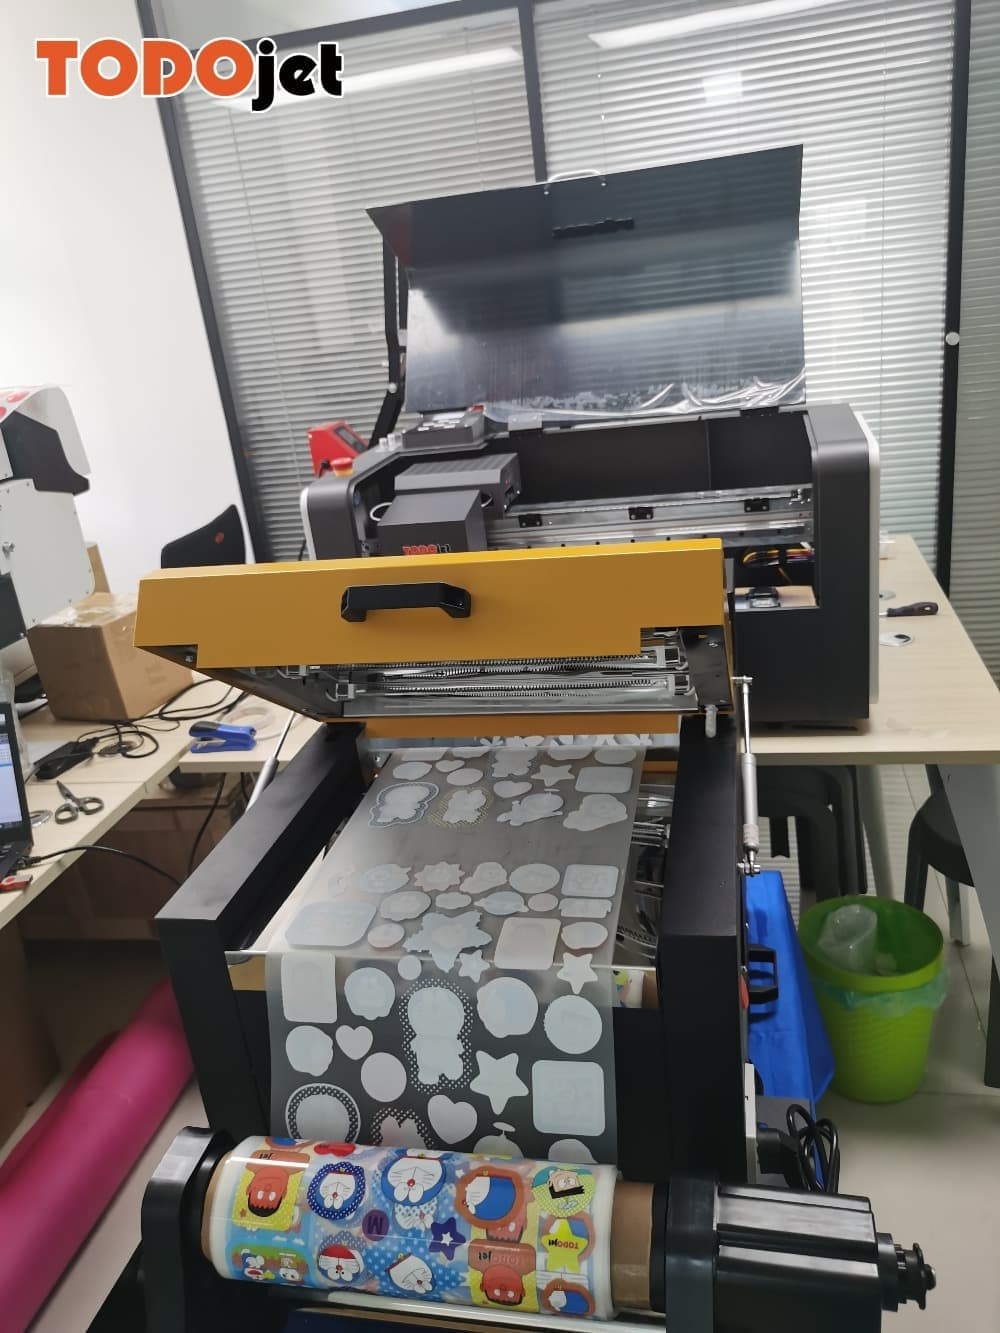 A3 DTF Printing System Direct to Film Printer Powder Shaker Shaking Dryer